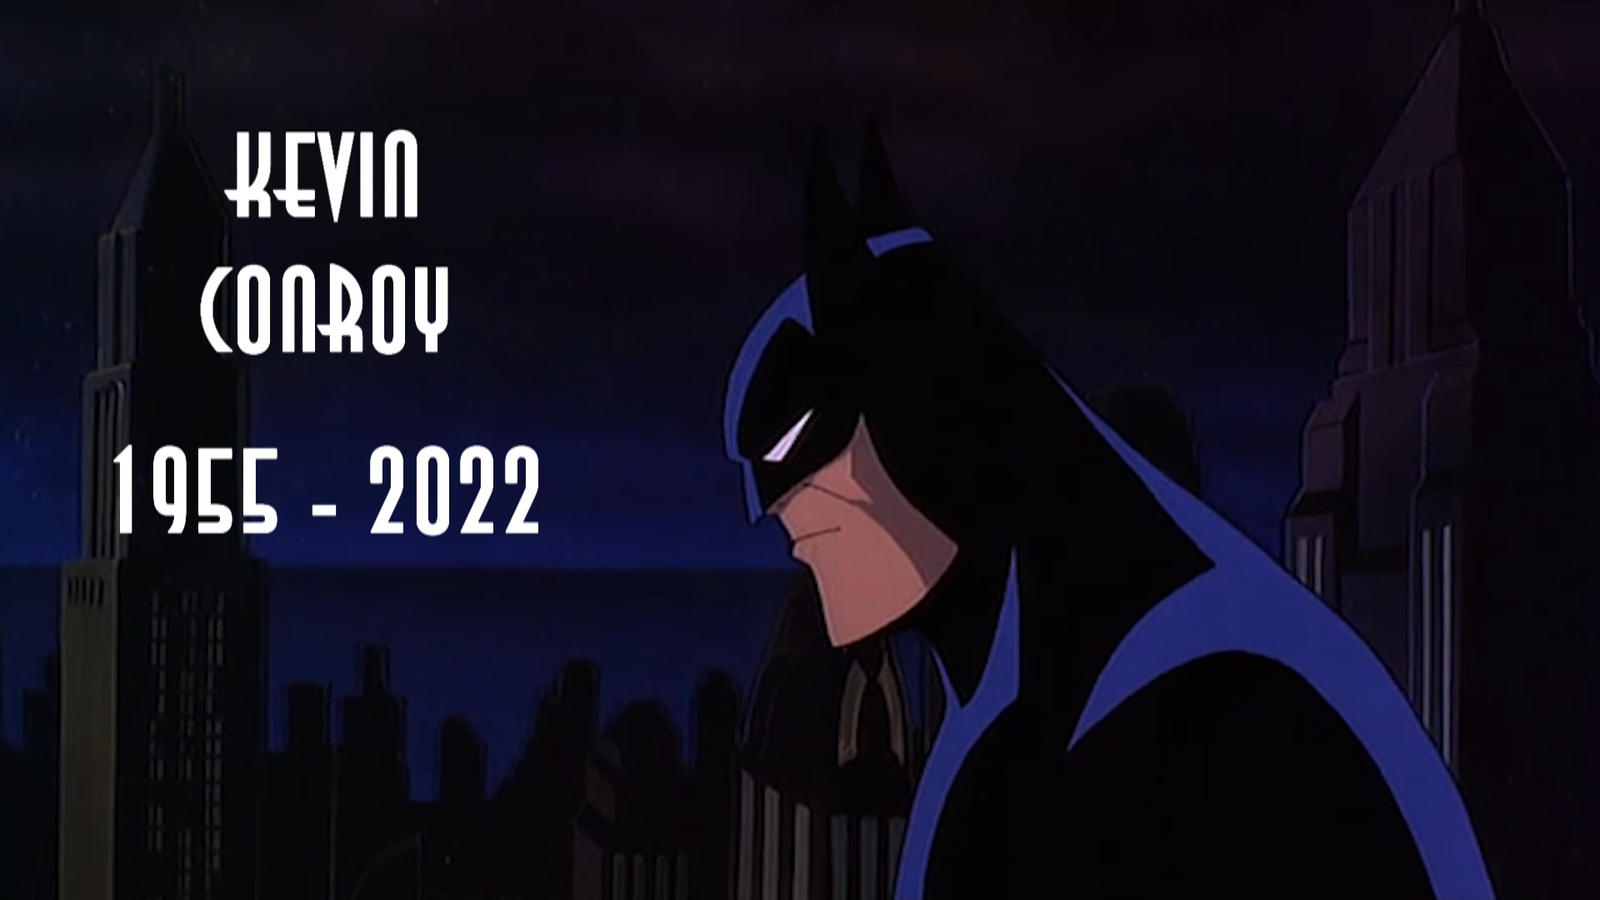 Remembering Kevin Conroy (November - History of The Batman